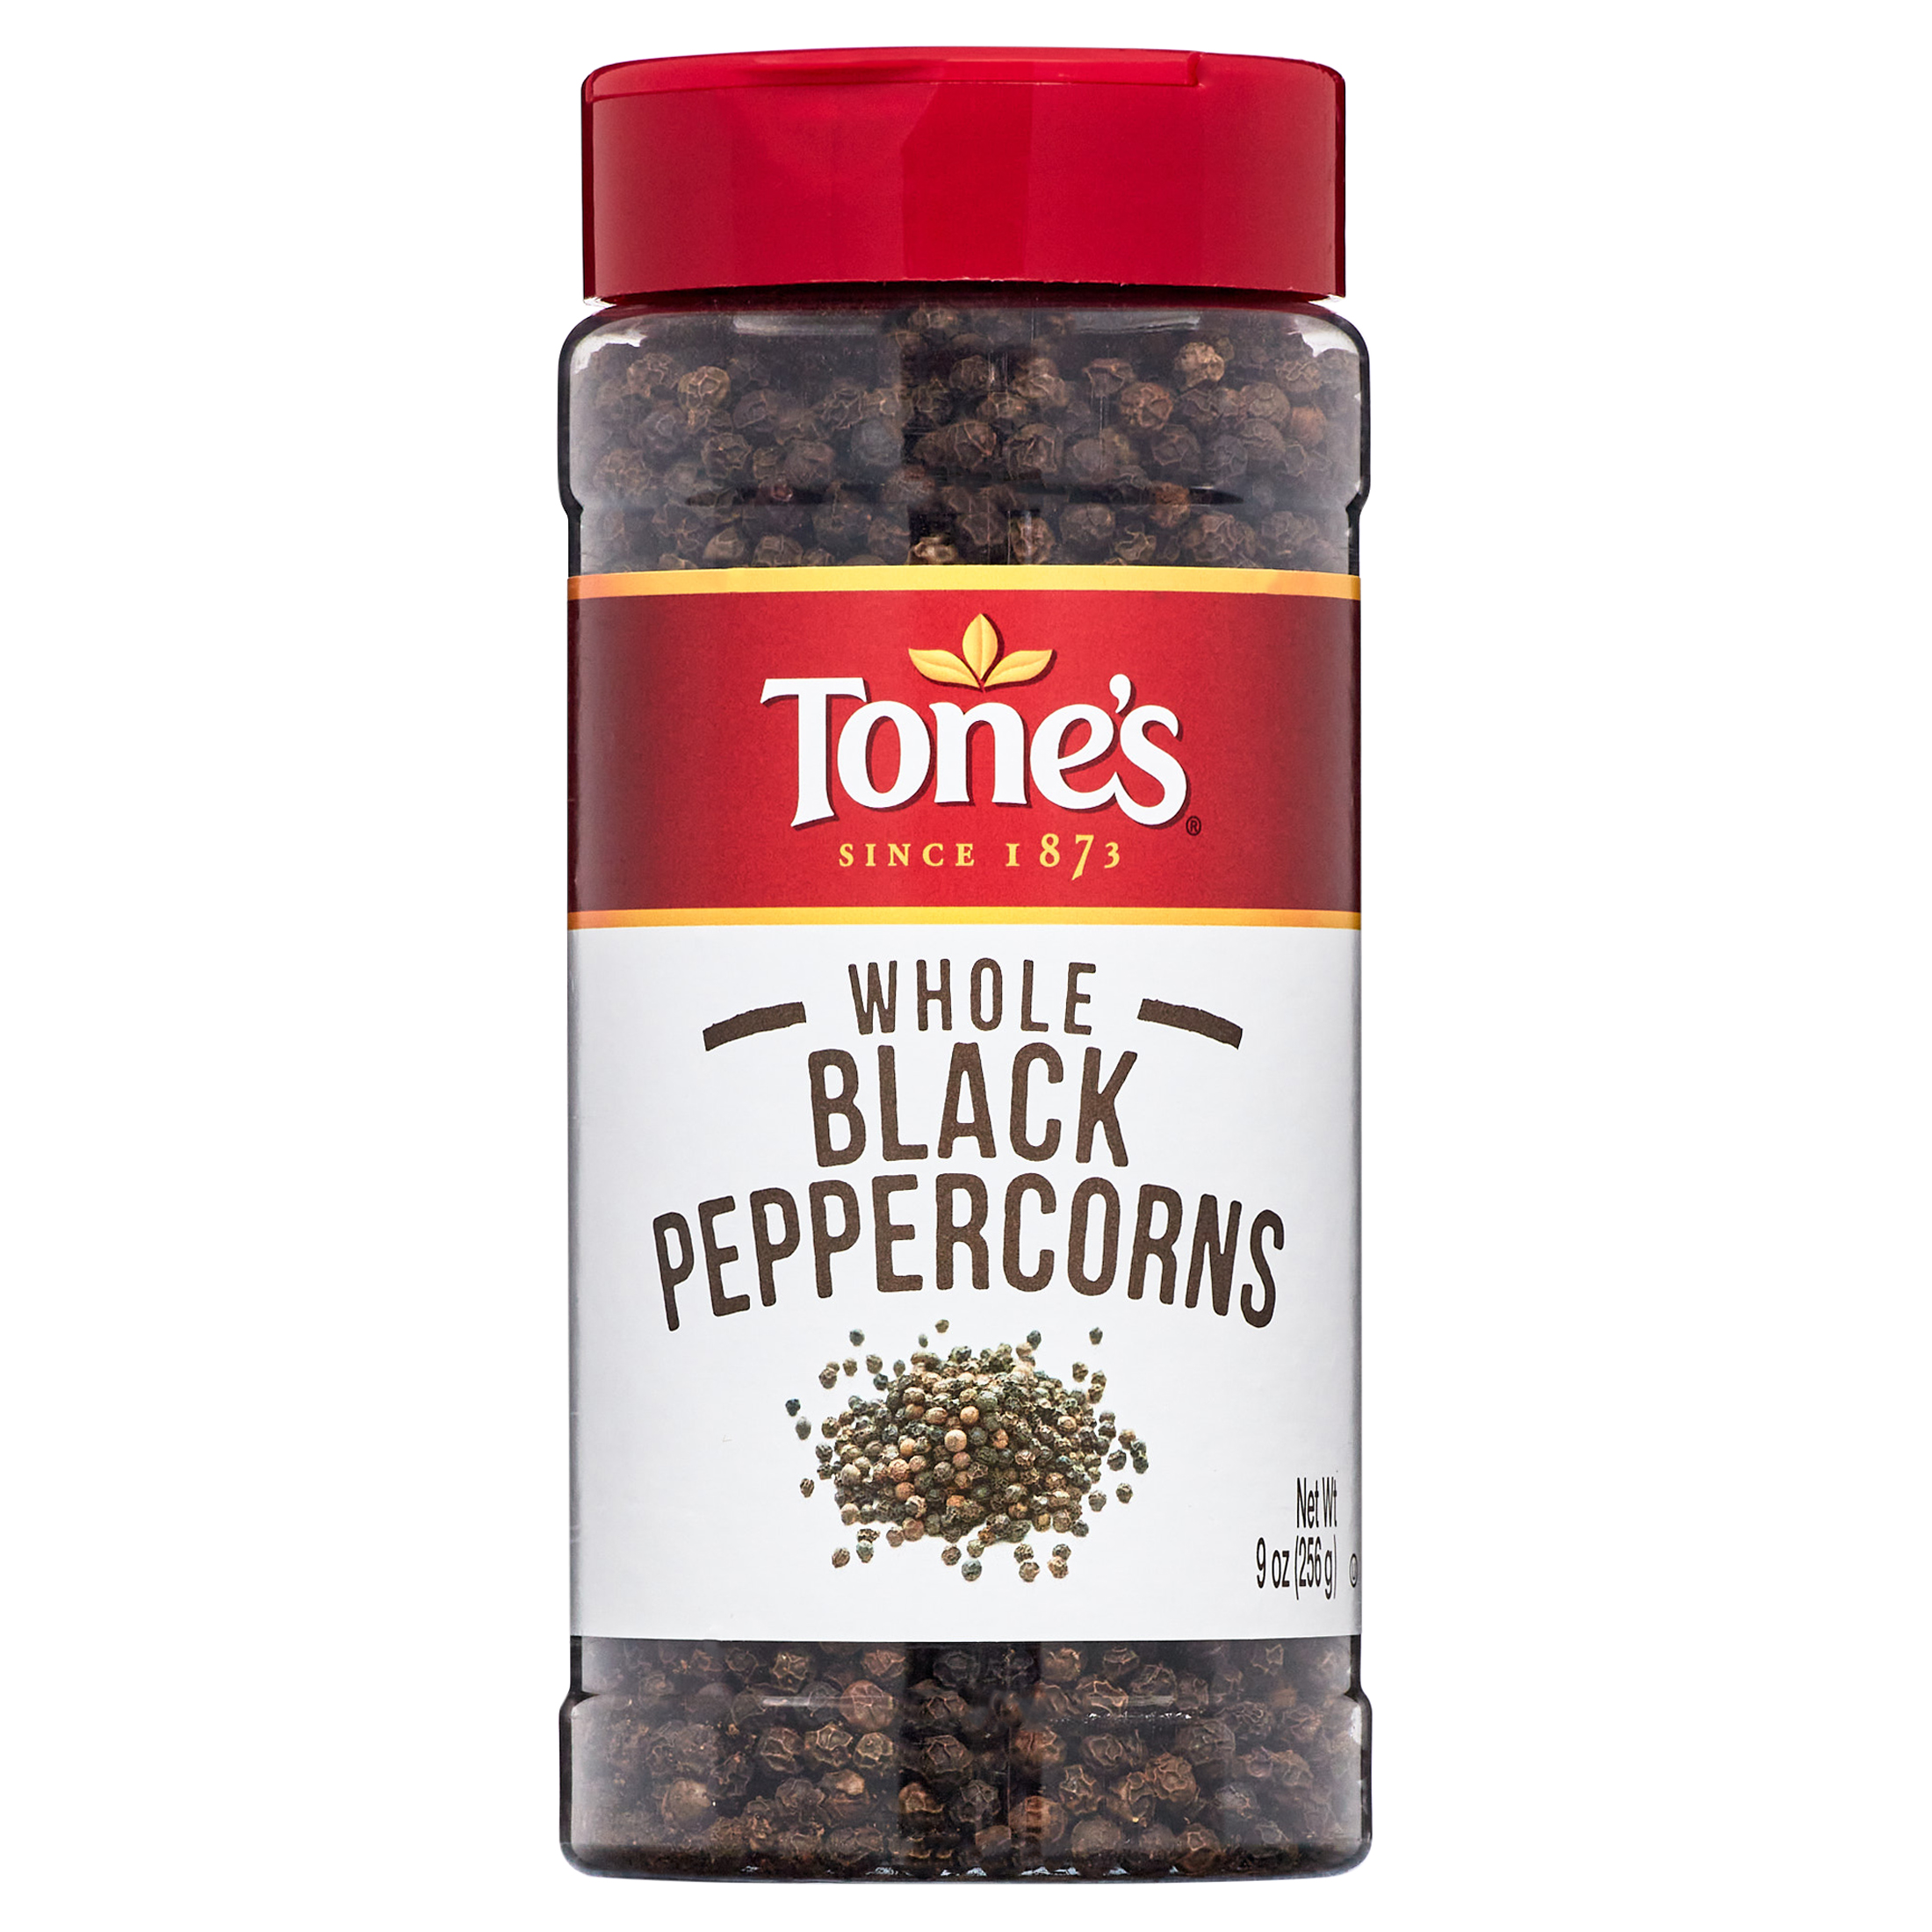 Tone's Black Peppercorns Whole, 9 oz $.78/oz - image 1 of 8